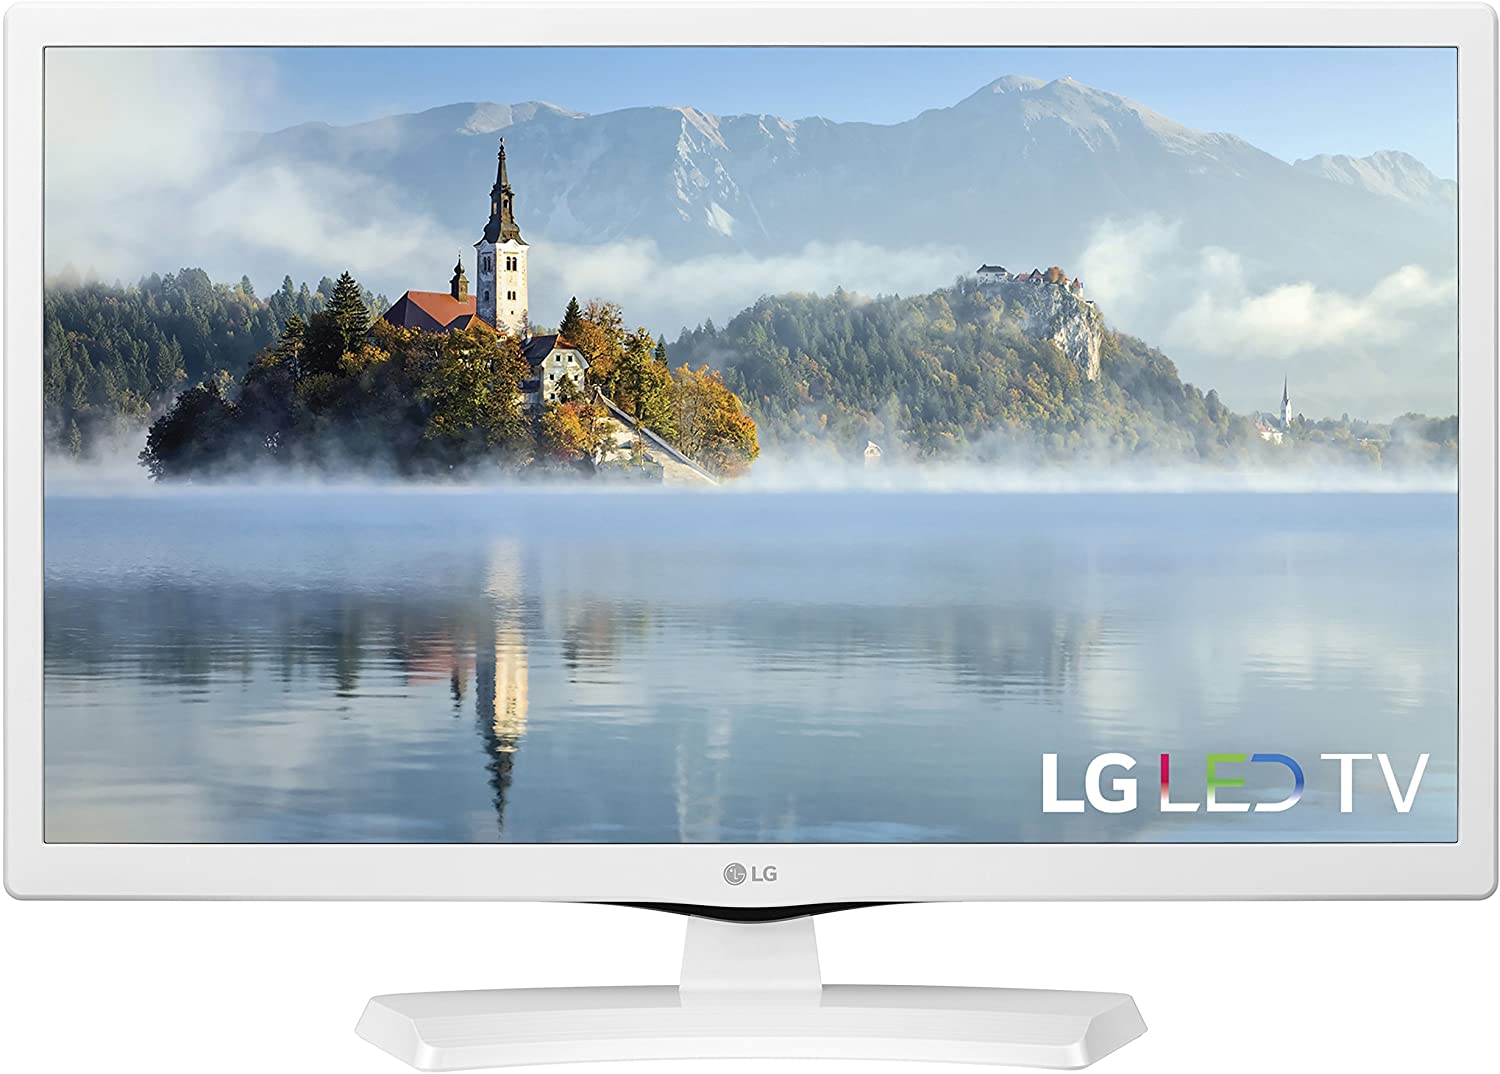 <strong>6. LG Electronics 24LJ4540-WU 24-Inch 720p LED HD TV</strong>